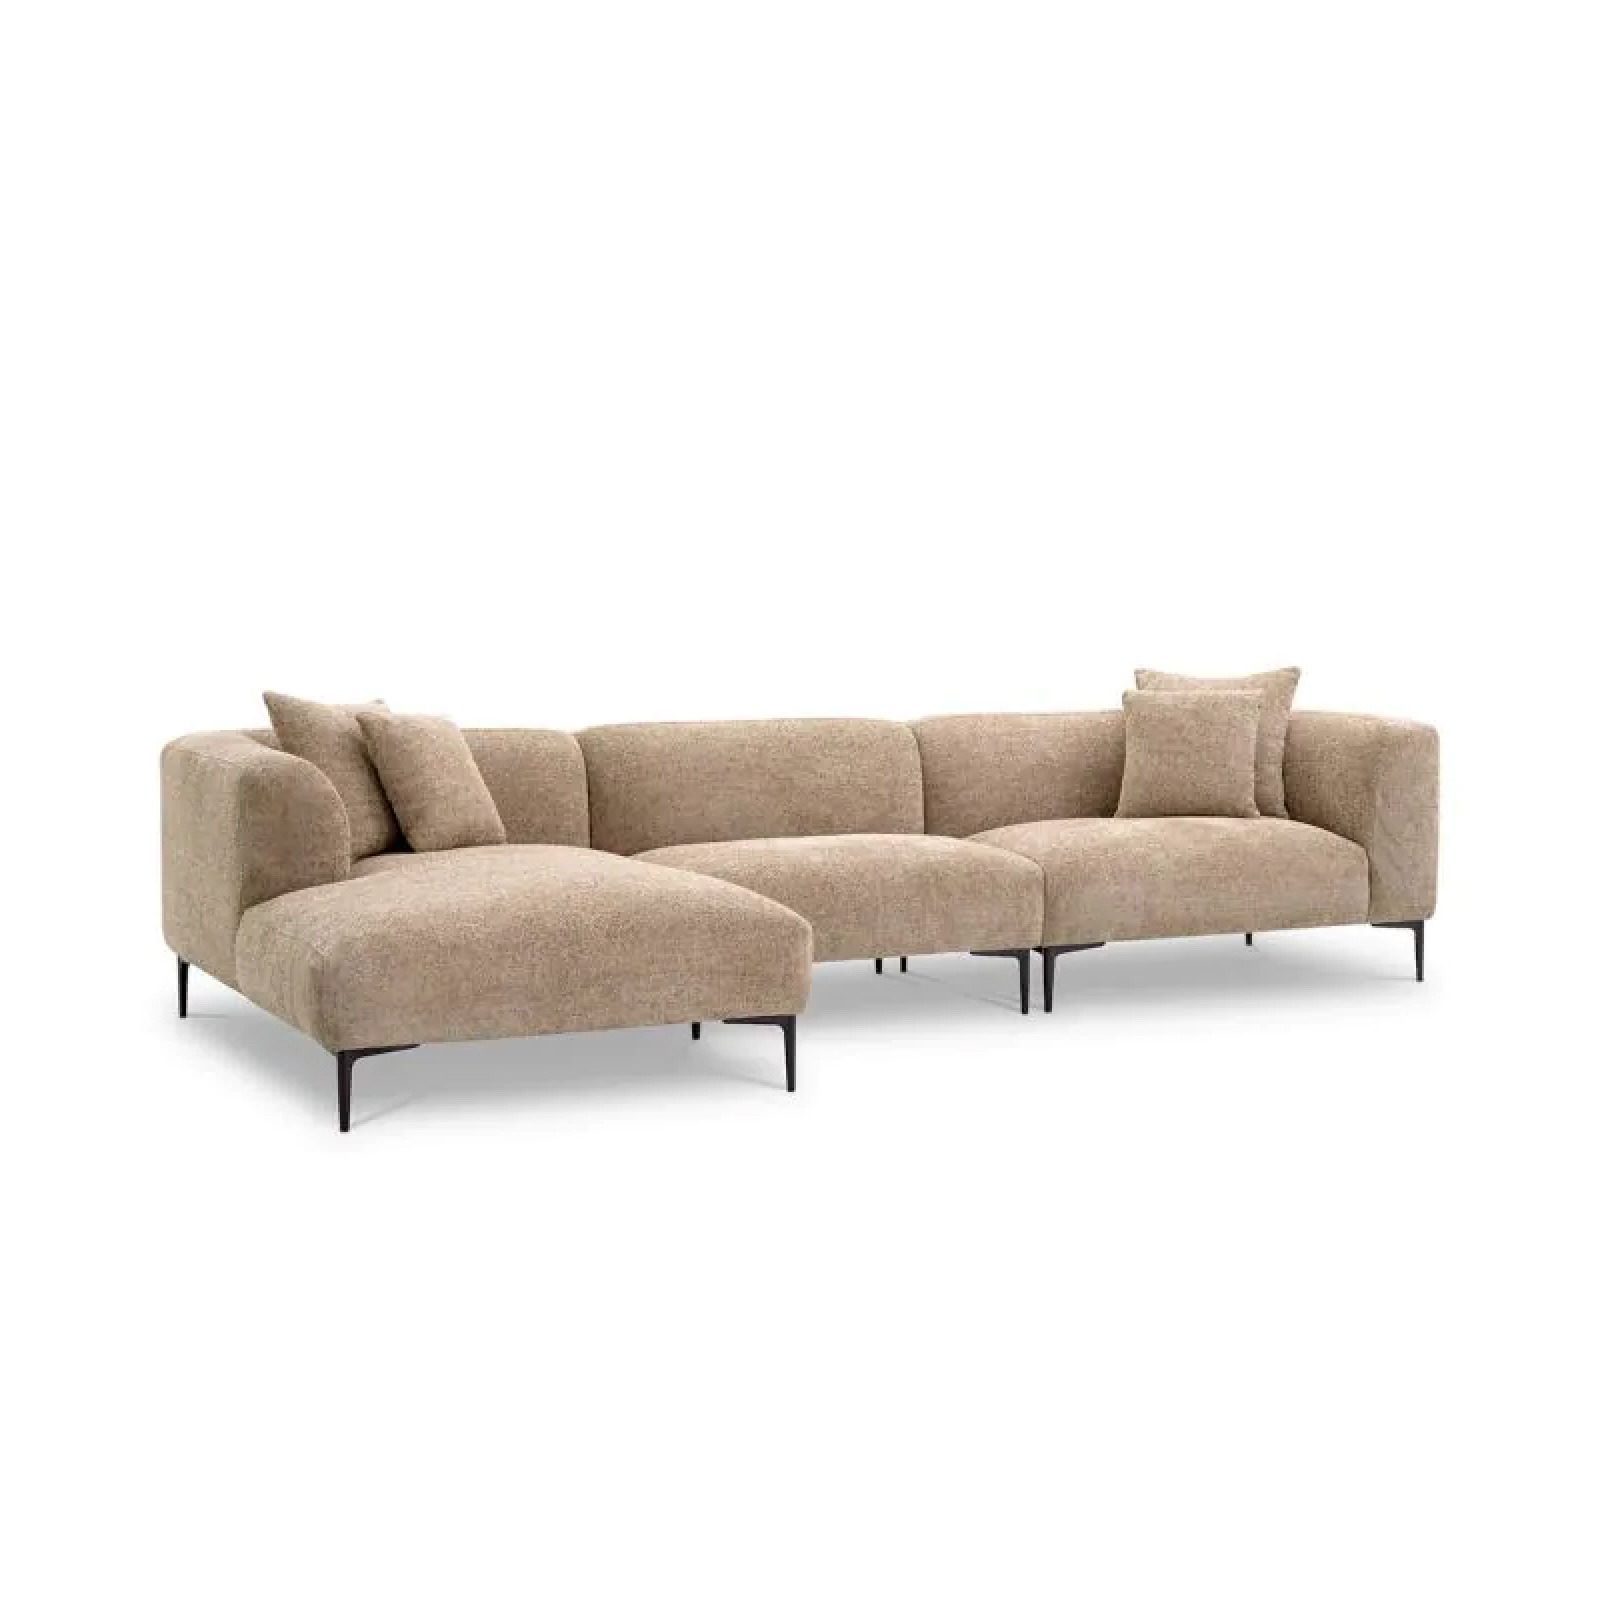 Firenze sofa